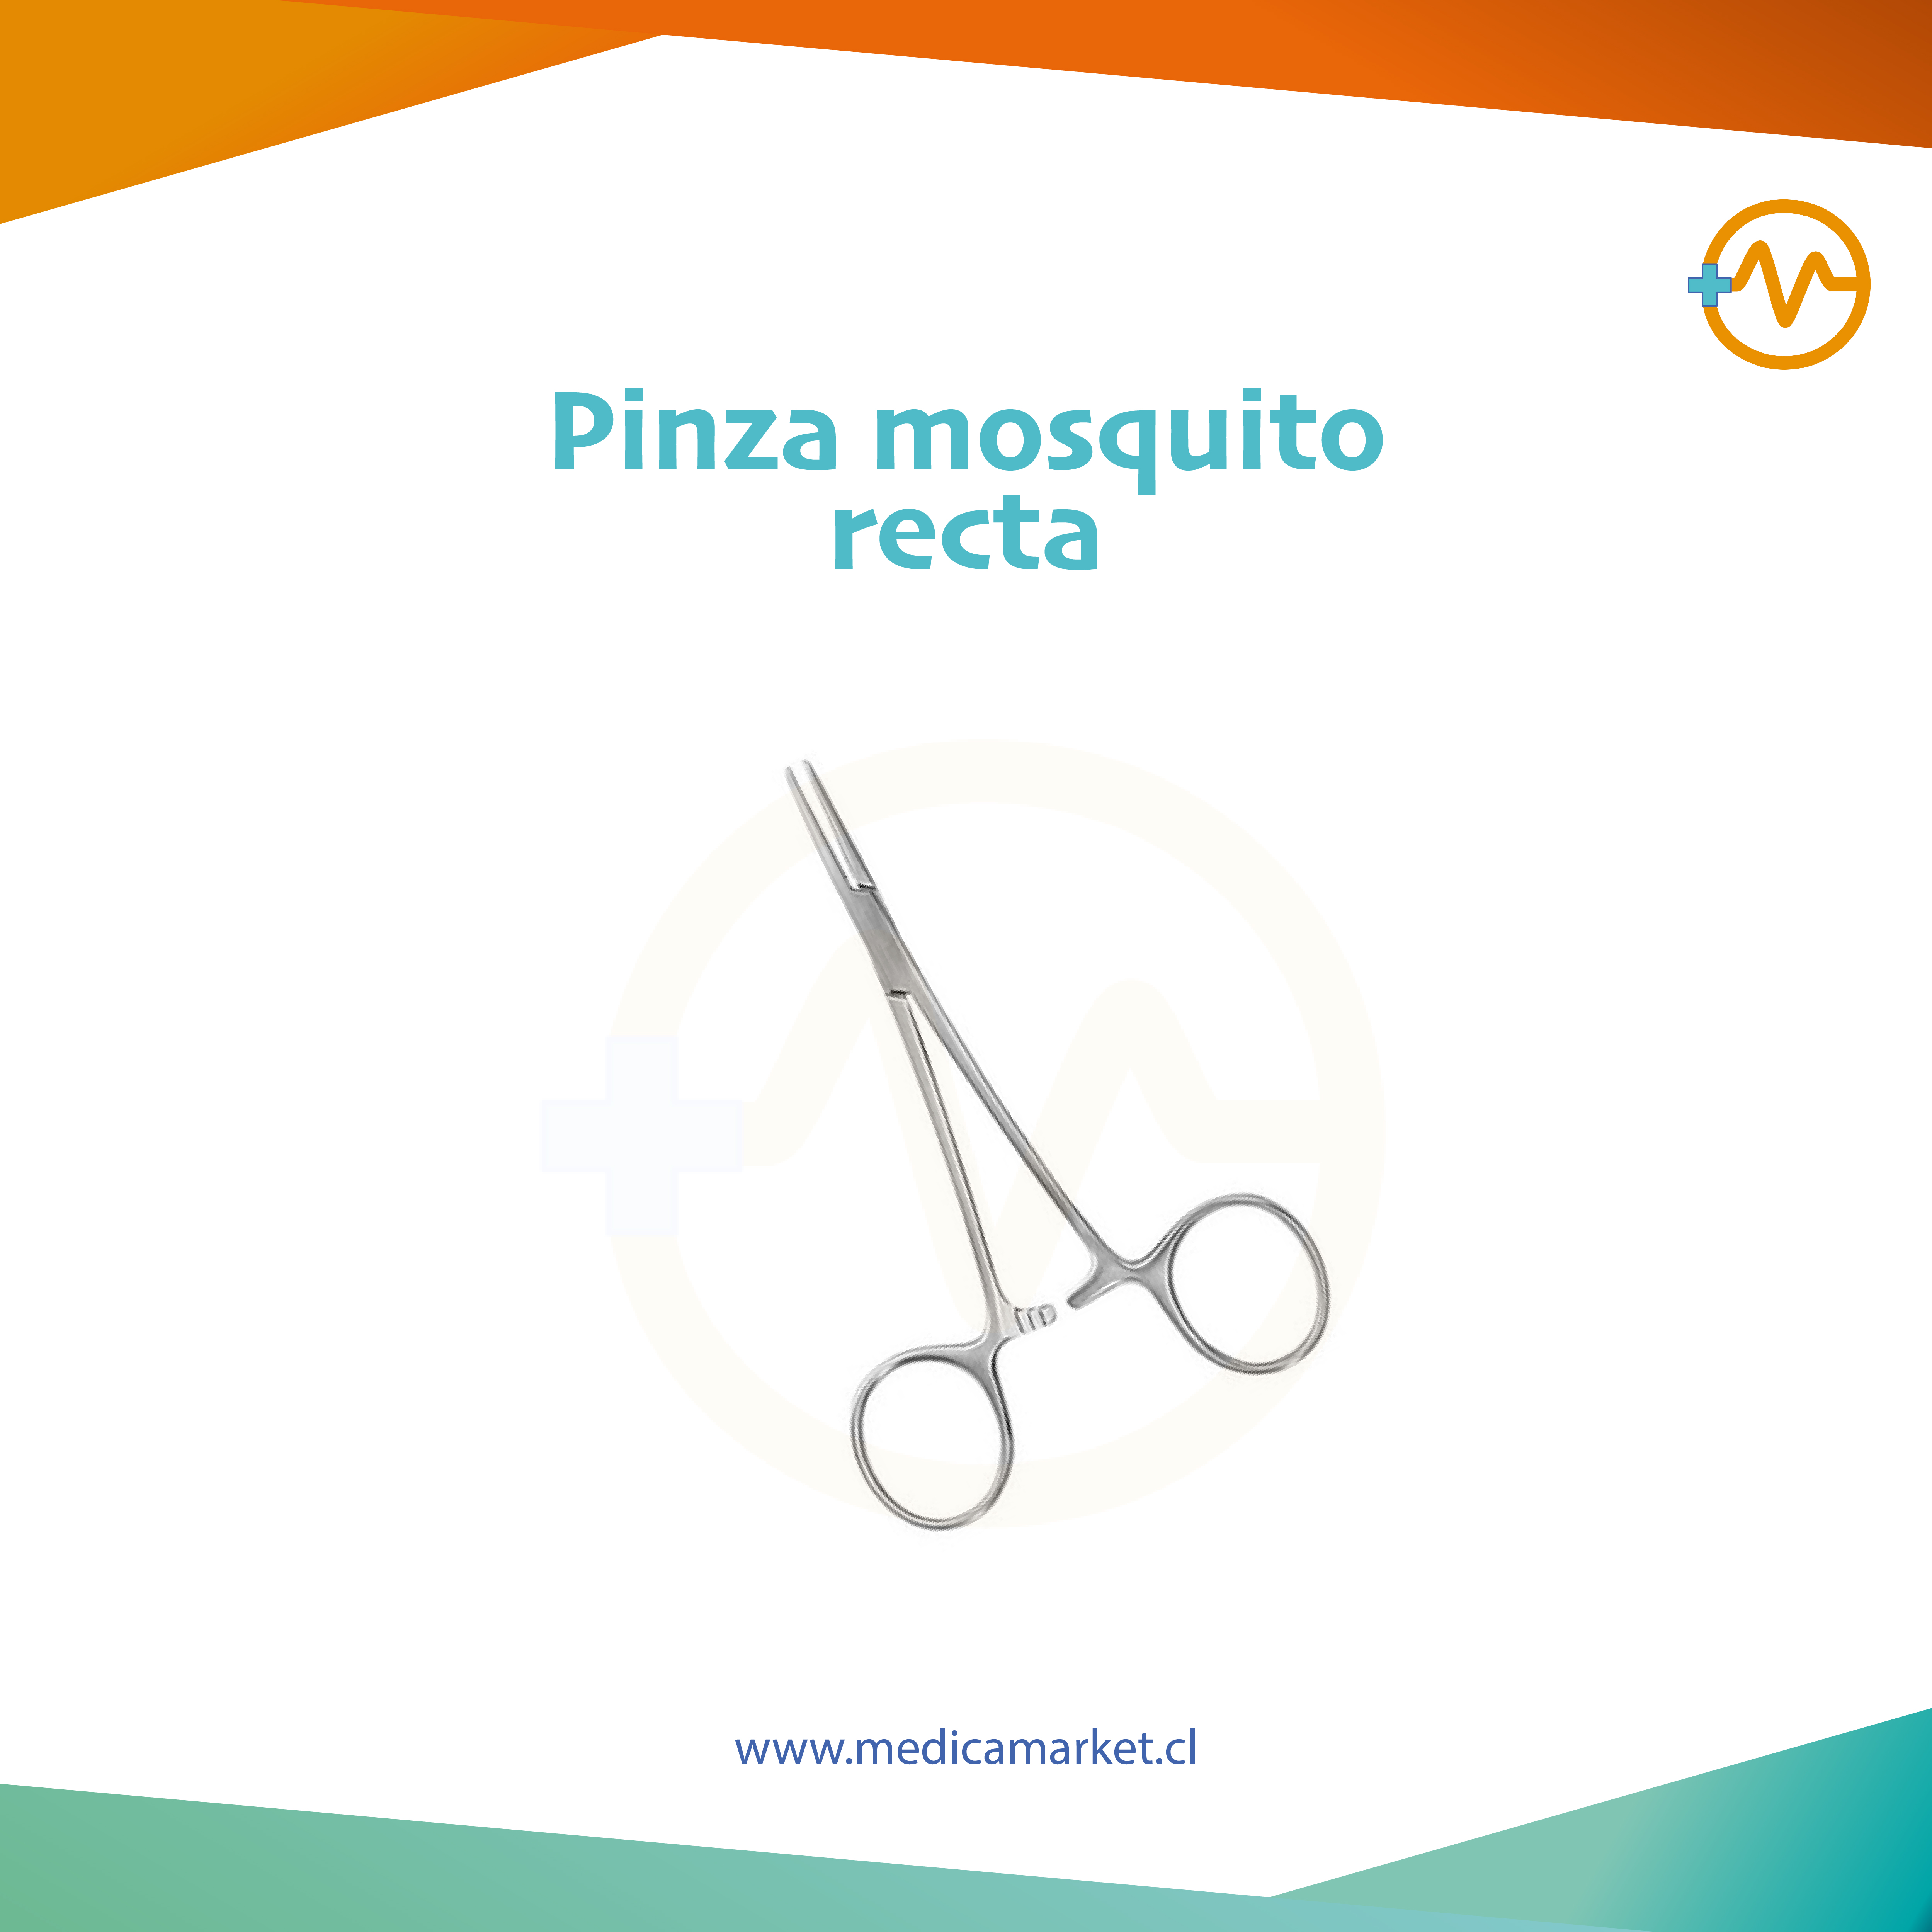 Pinza mosquito – Market